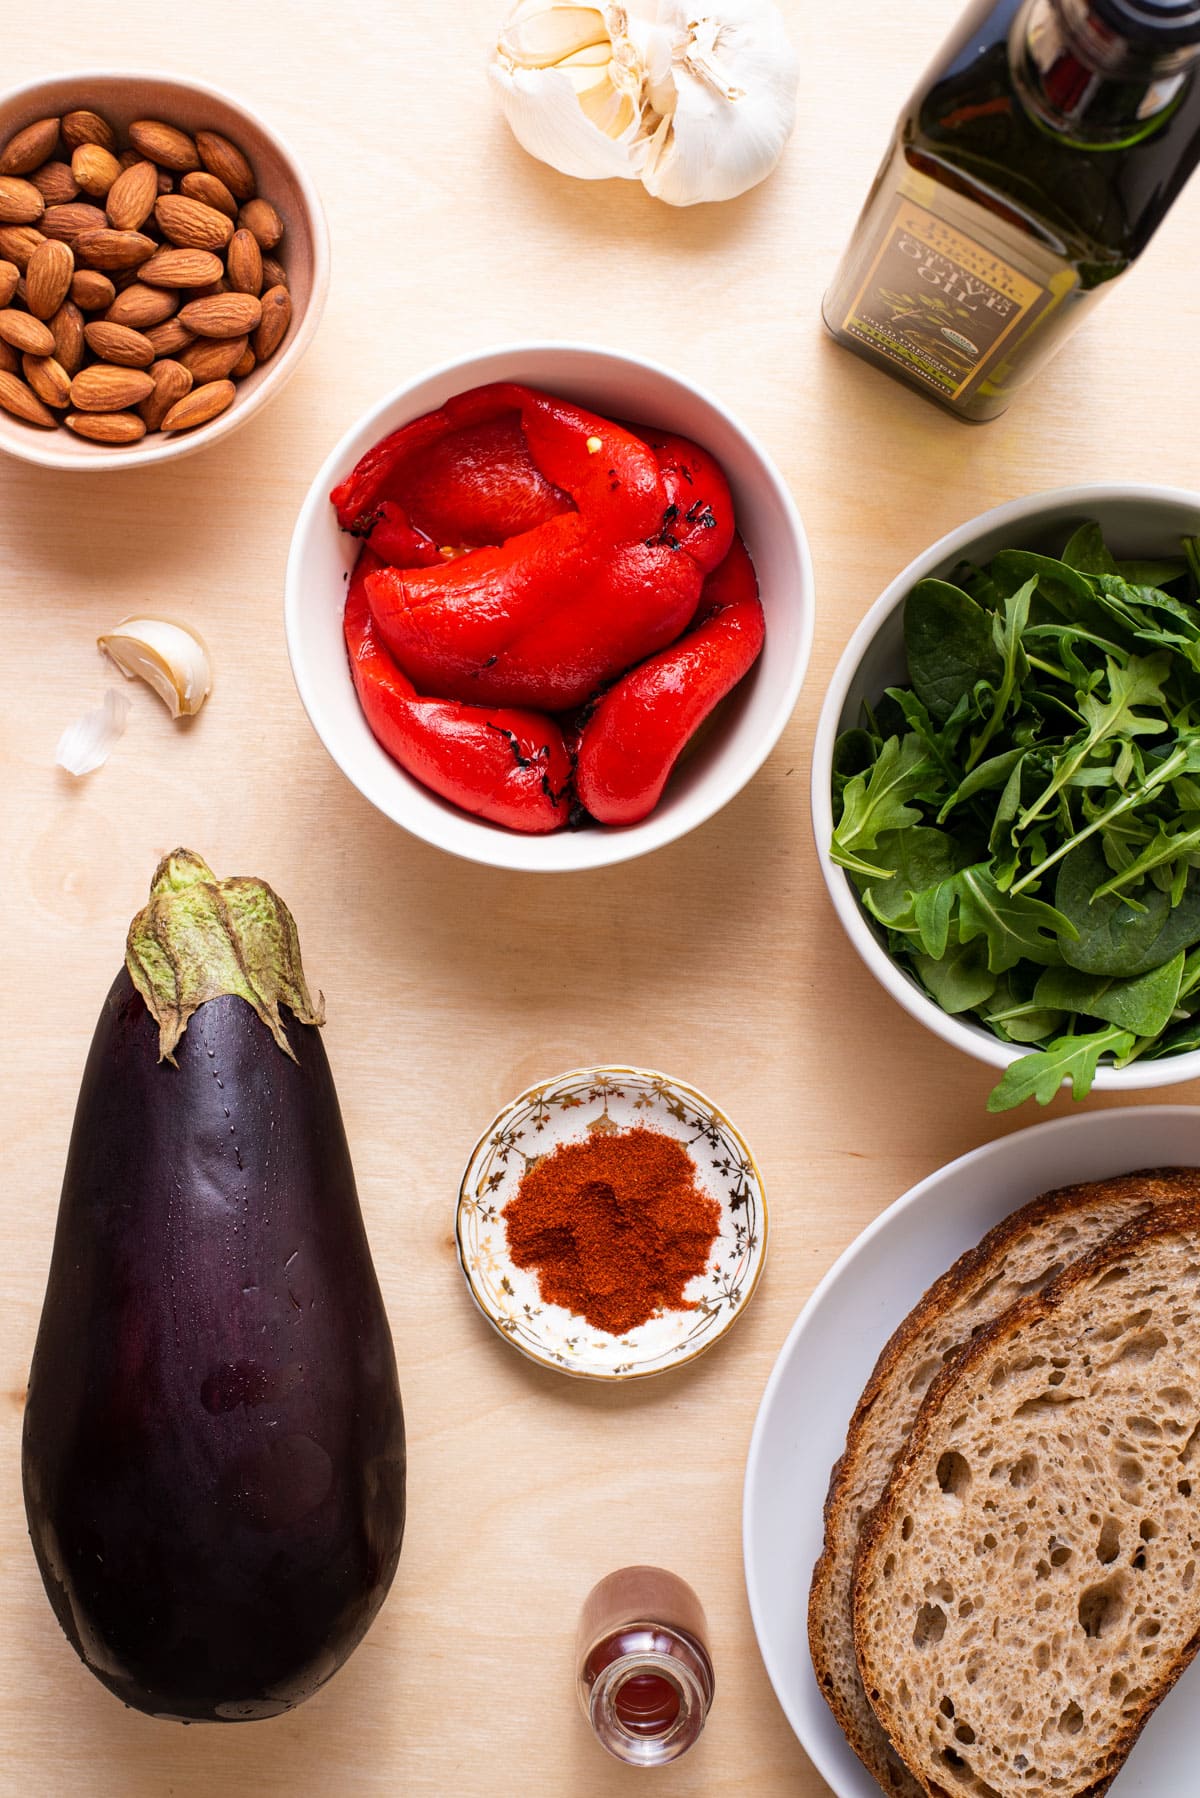 Ingredients gathered to make vegan eggplant sandwiches.